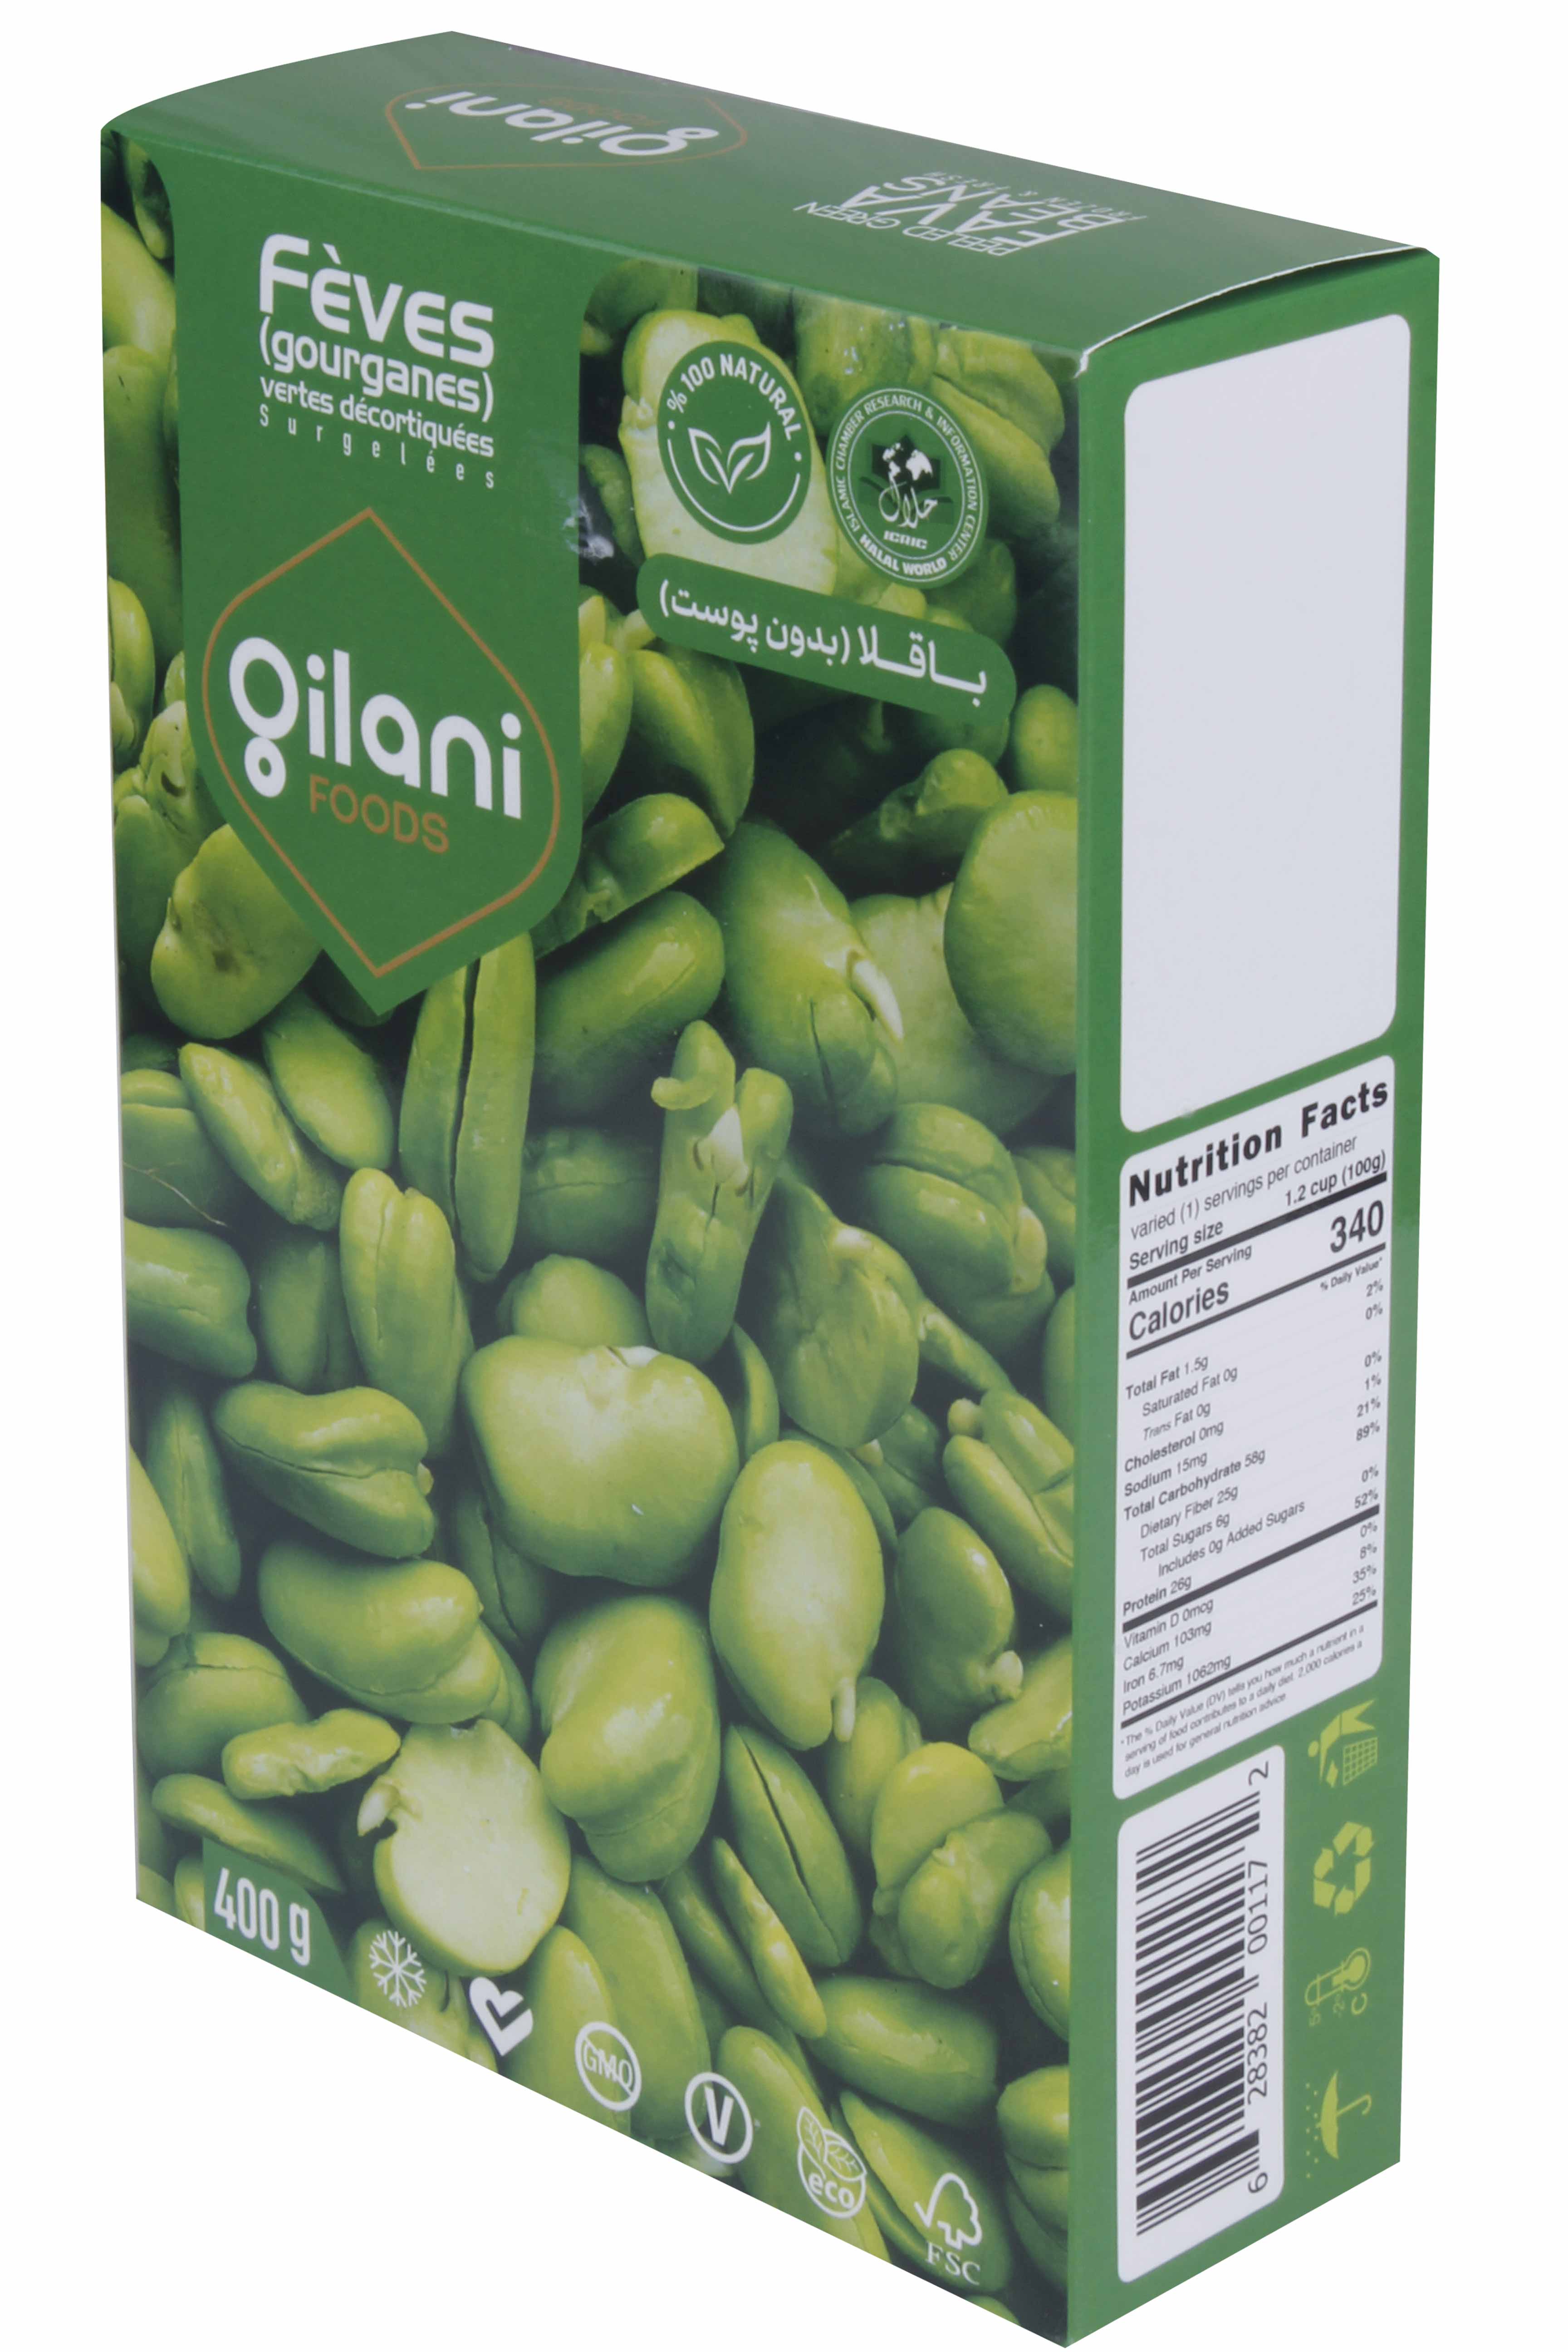 Gilani Frozen Shieldless Green Fava beans